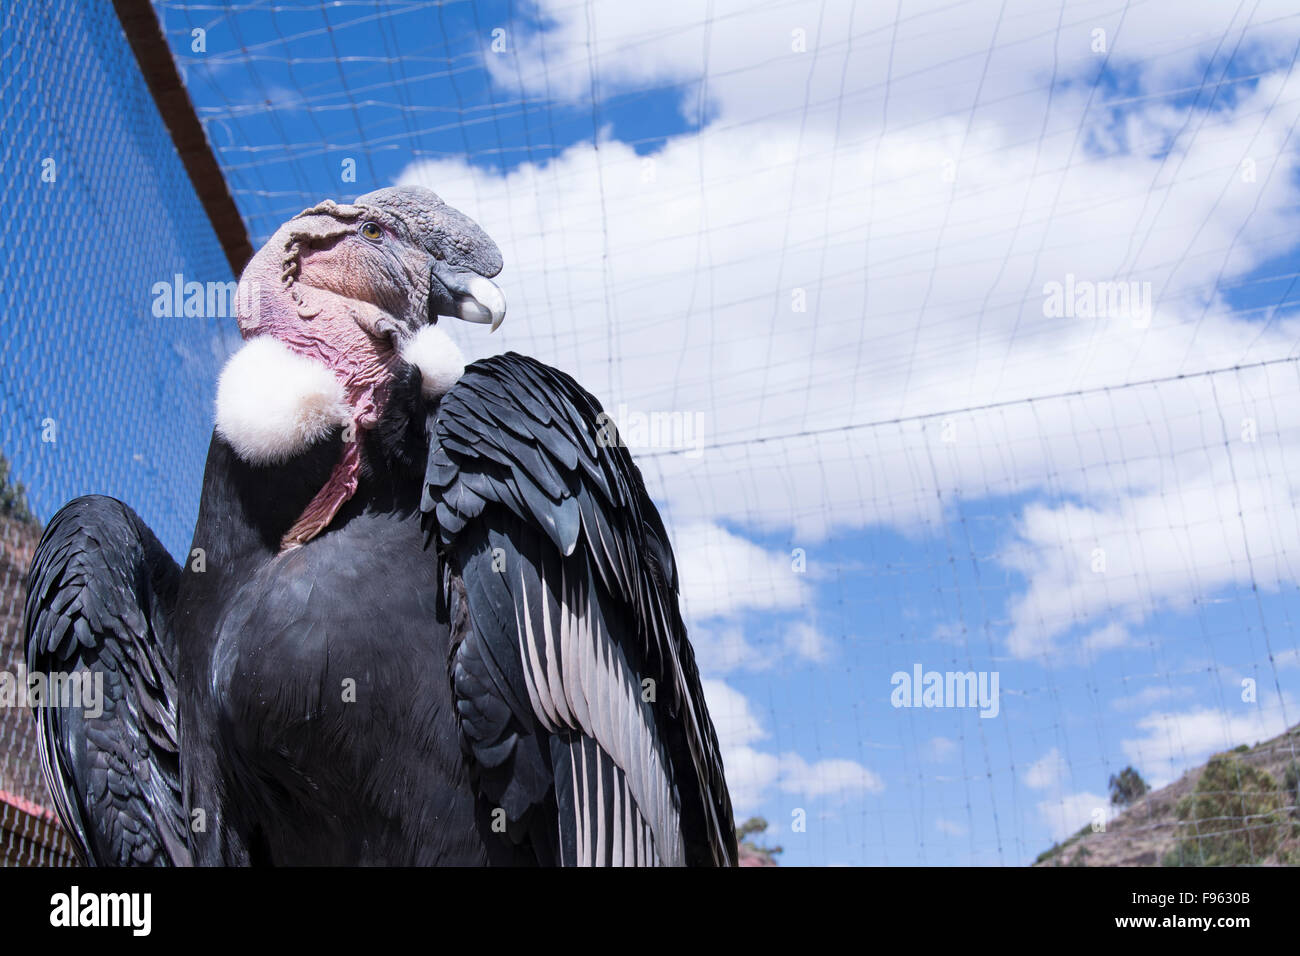 Captive Condor, Pisac, Peru Stock Photo